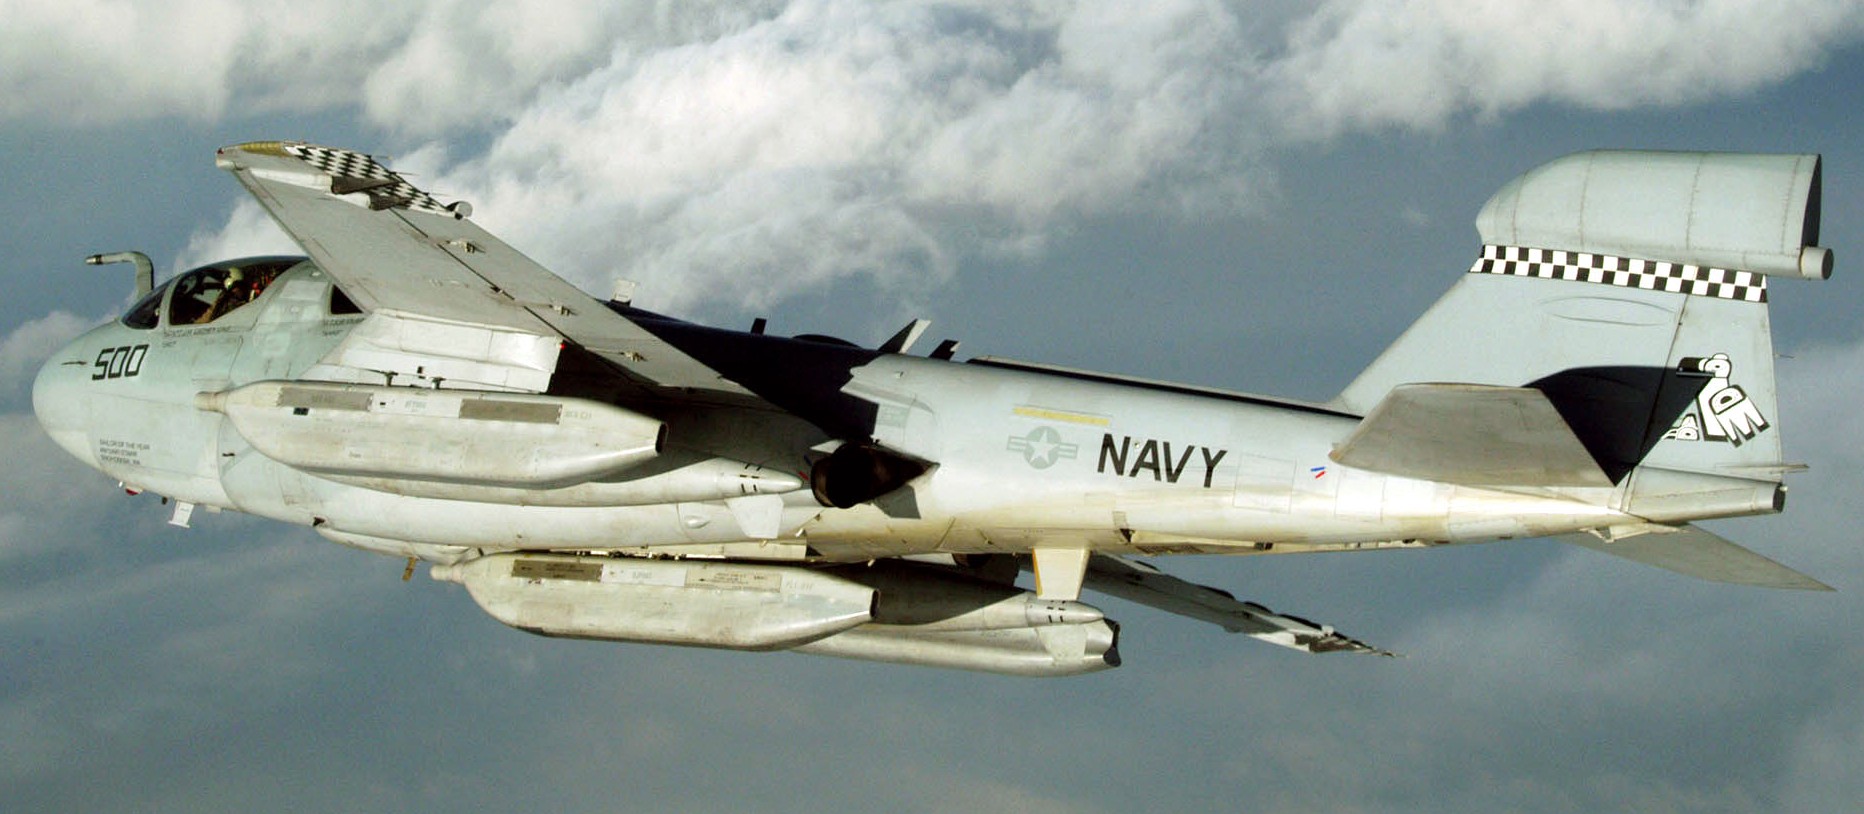 vaq-137 rooks electronic attack squadron us navy ea-6b prowler carrier air wing cvw-1 uss enterprise cvn-65 04